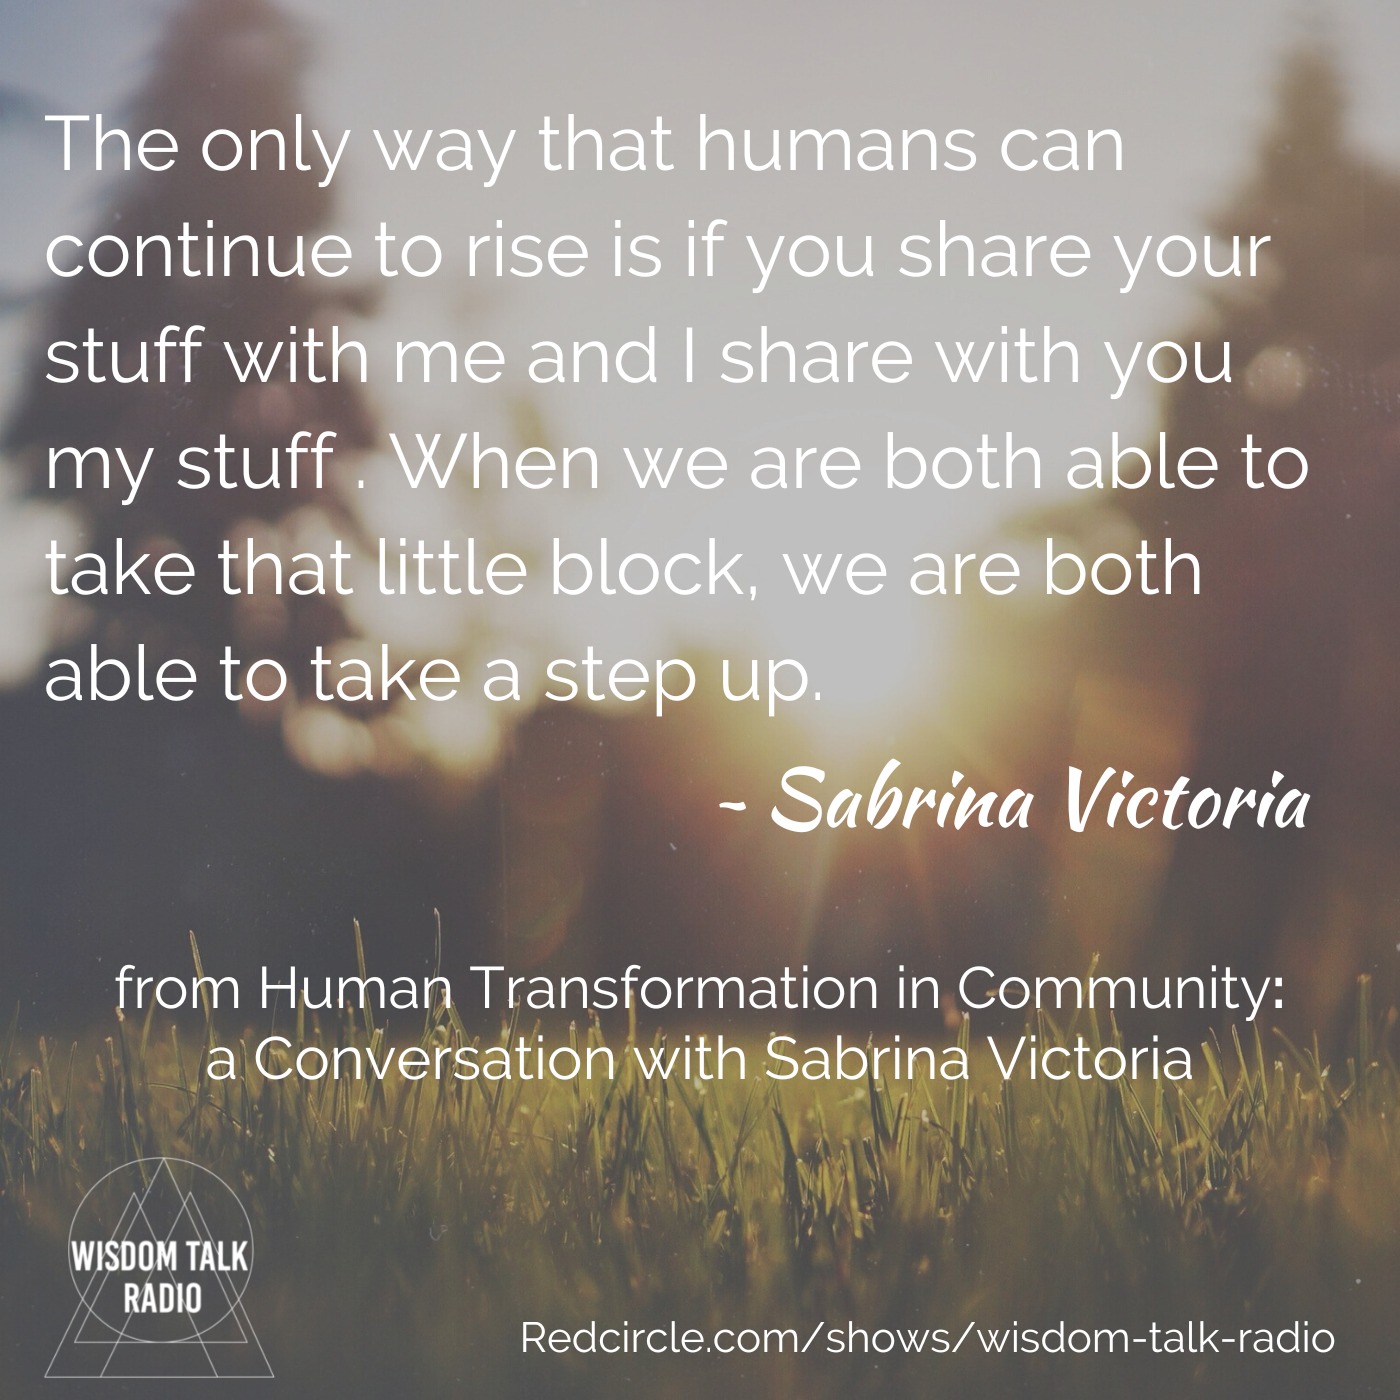 Human Transformation in Community: a Conversation with Sabrina Victoria